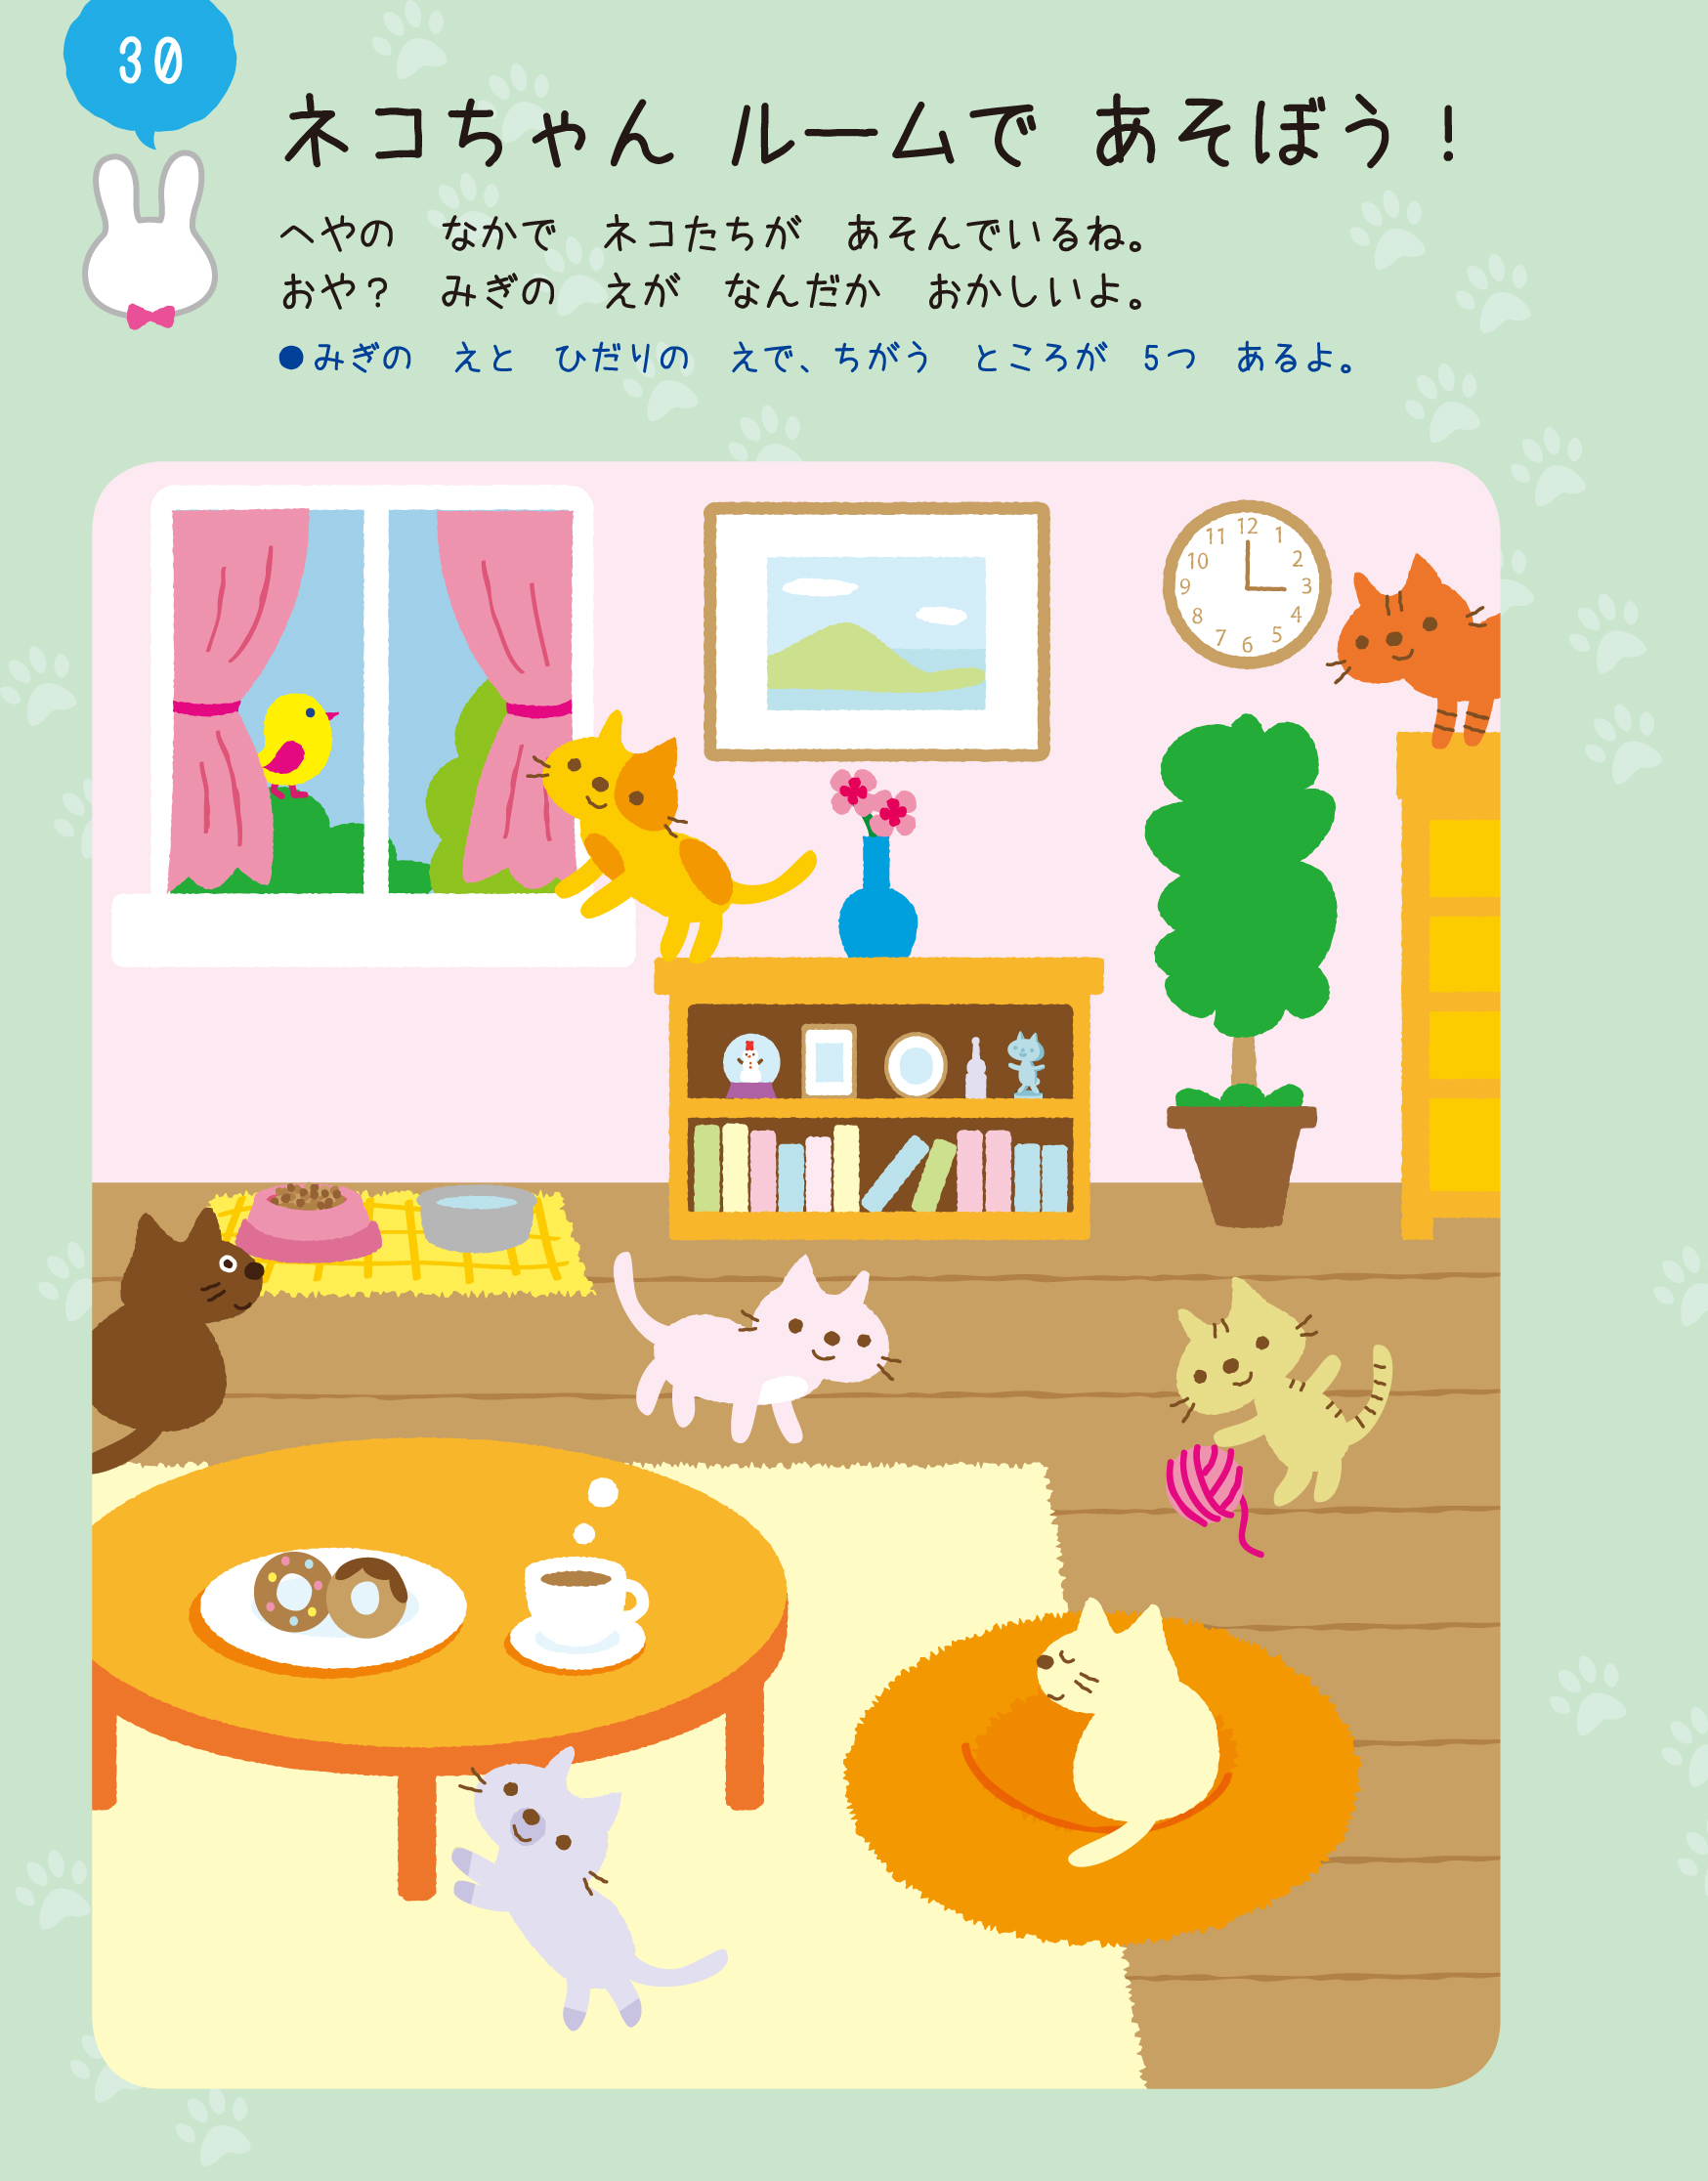 Children’s book illustration